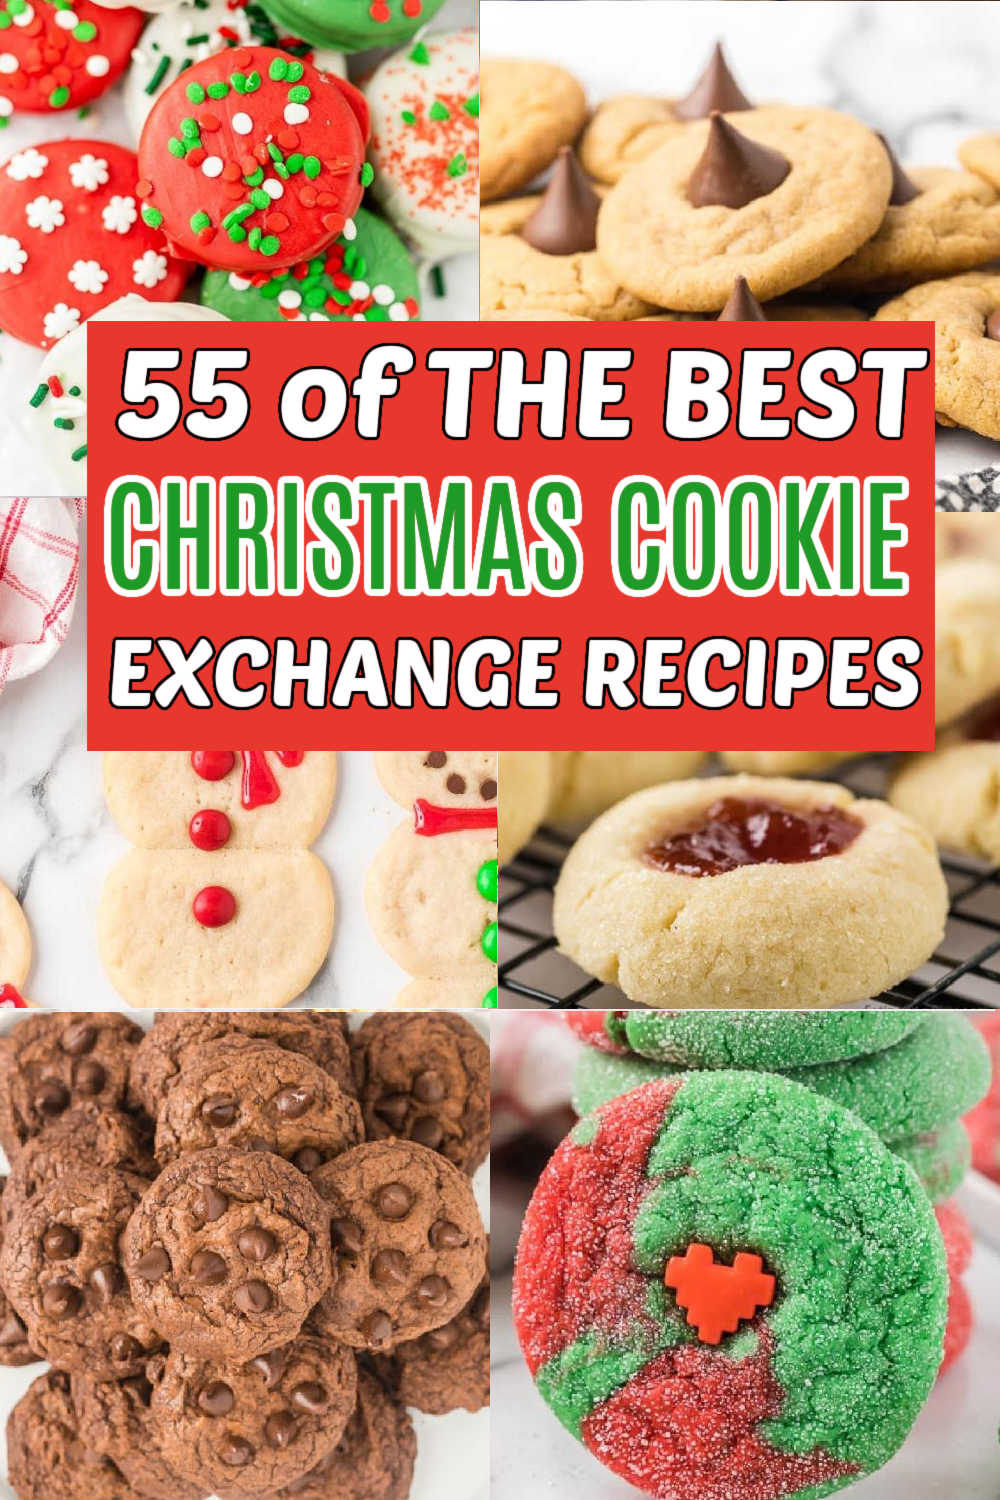 https://www.eatingonadime.com/wp-content/uploads/2022/11/Christmas-Cookie-Exchange-Recipes-low.jpg